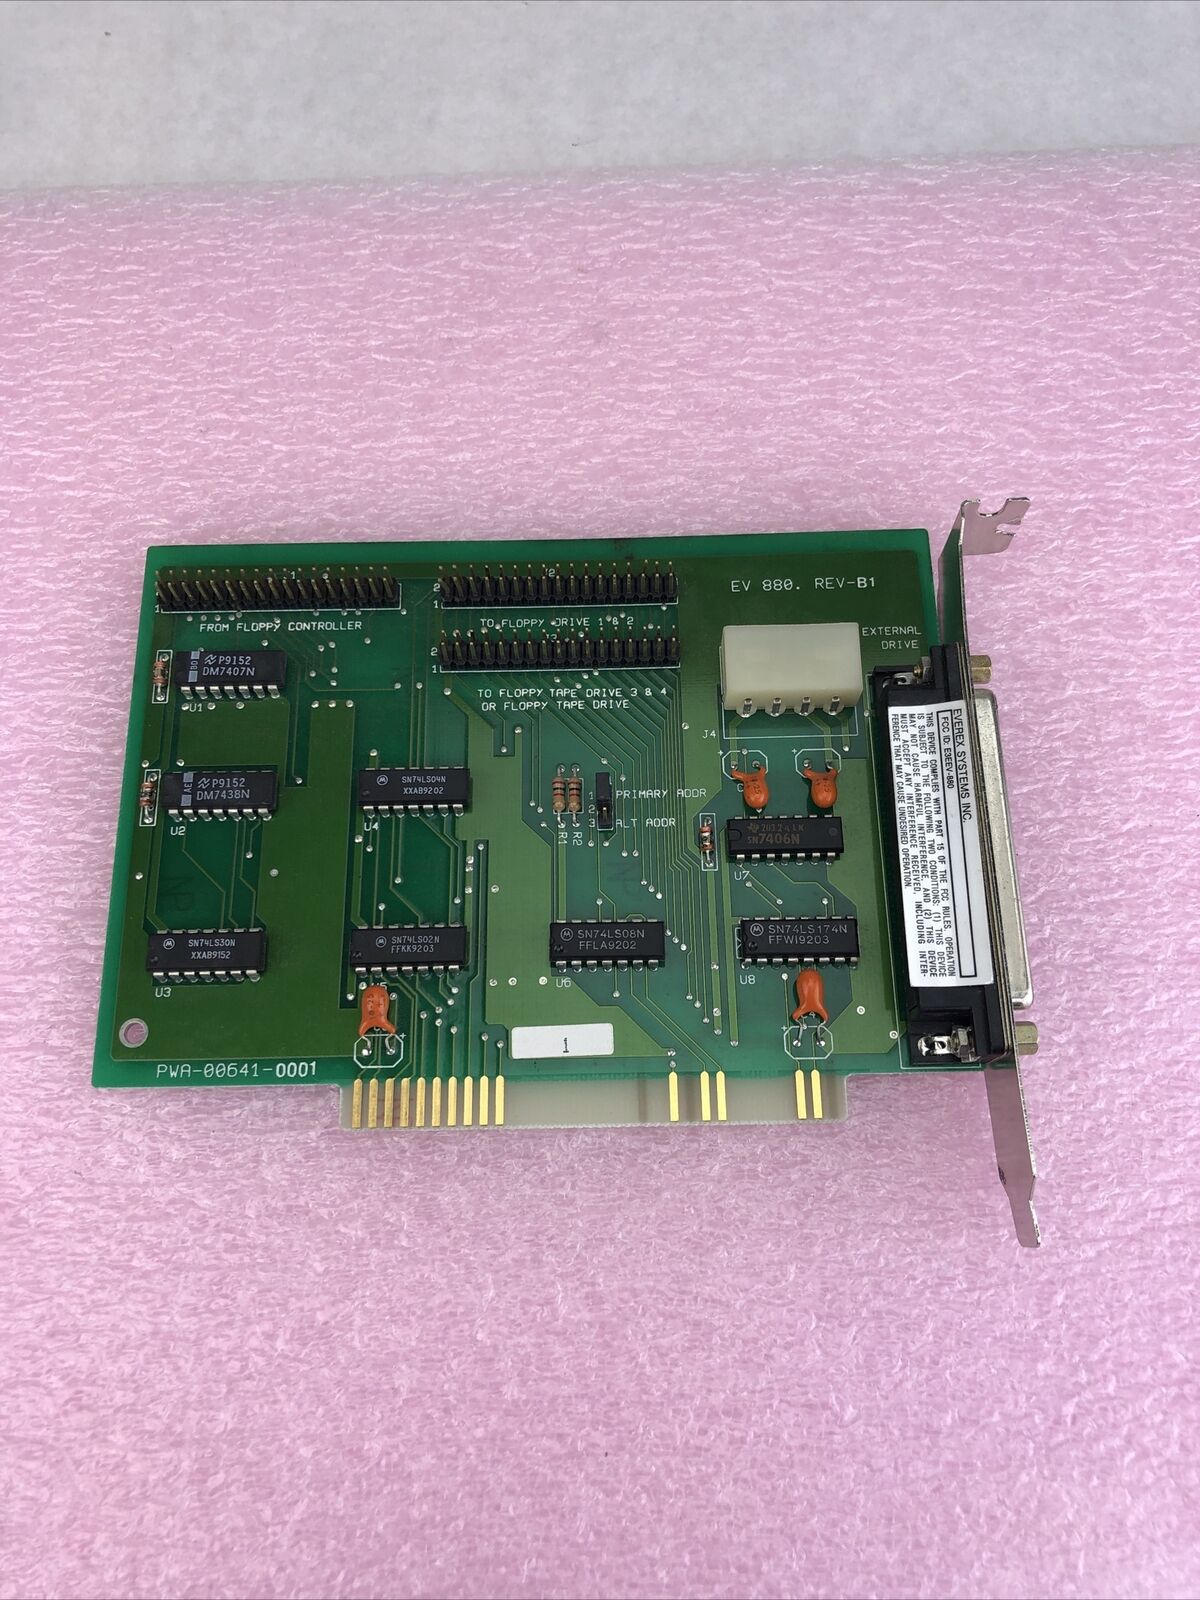 EVEREX PWA-00641-0001 Floppy & Tape Controller